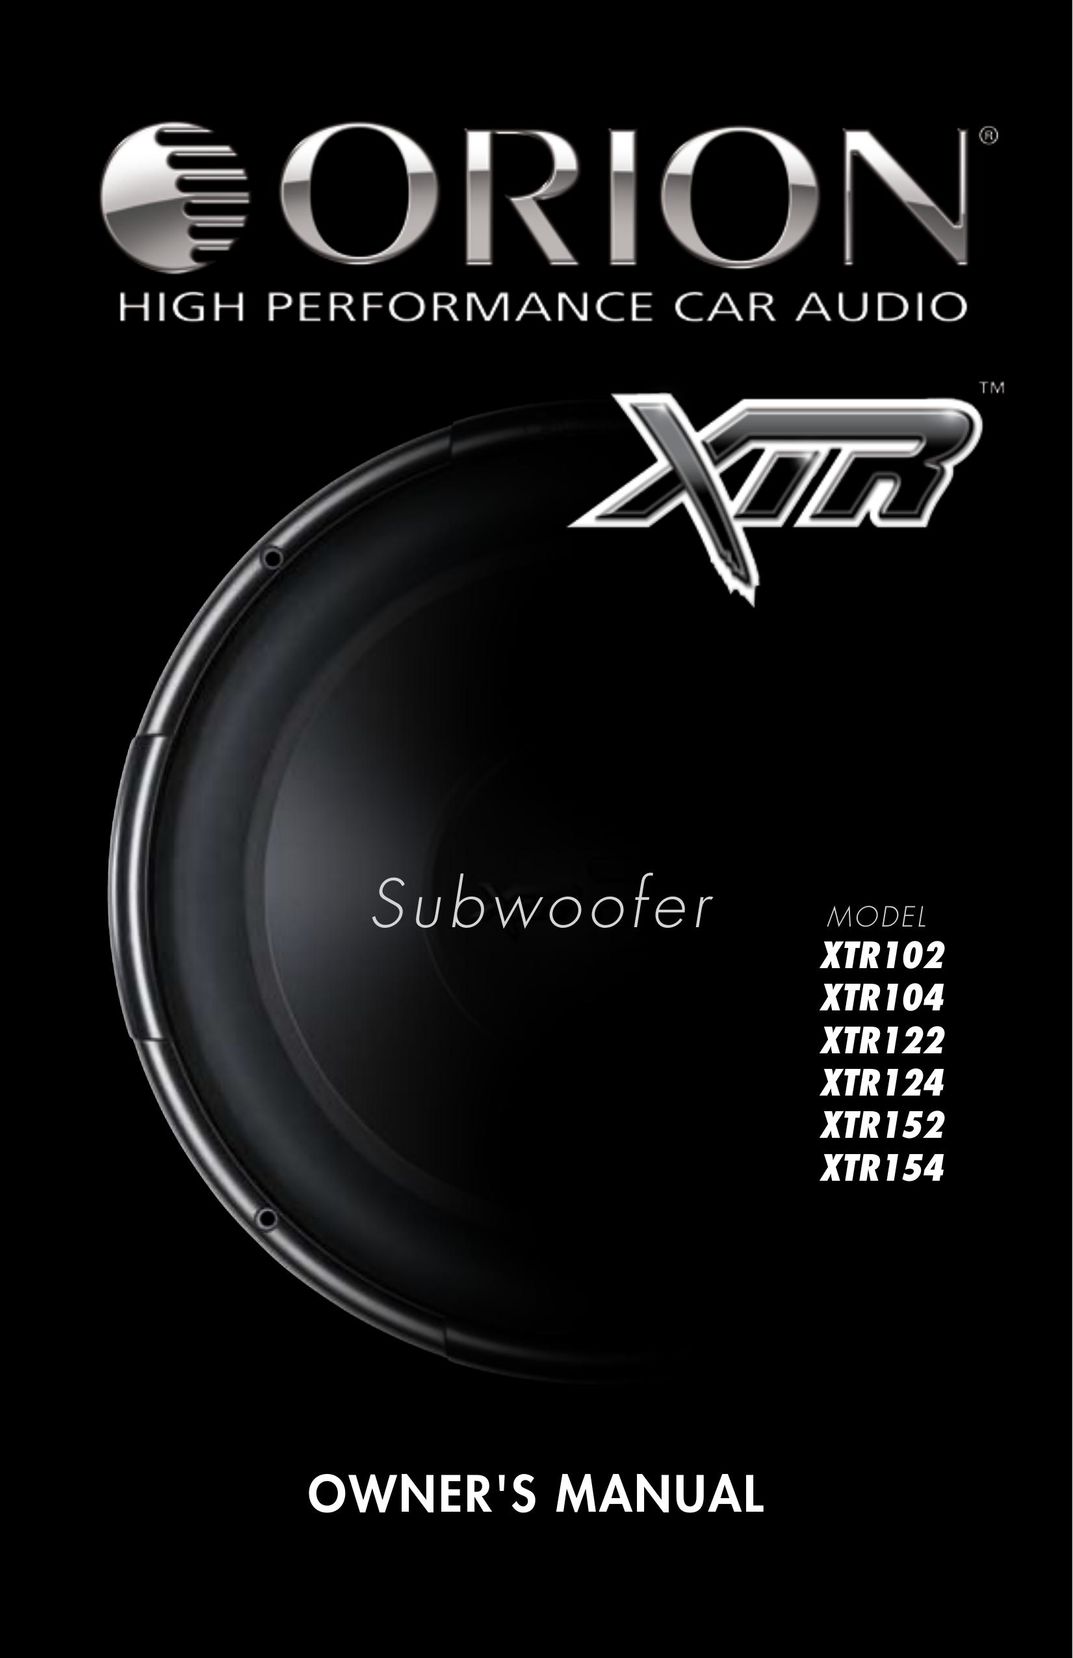 Orion Car Audio XTR104 Speaker User Manual